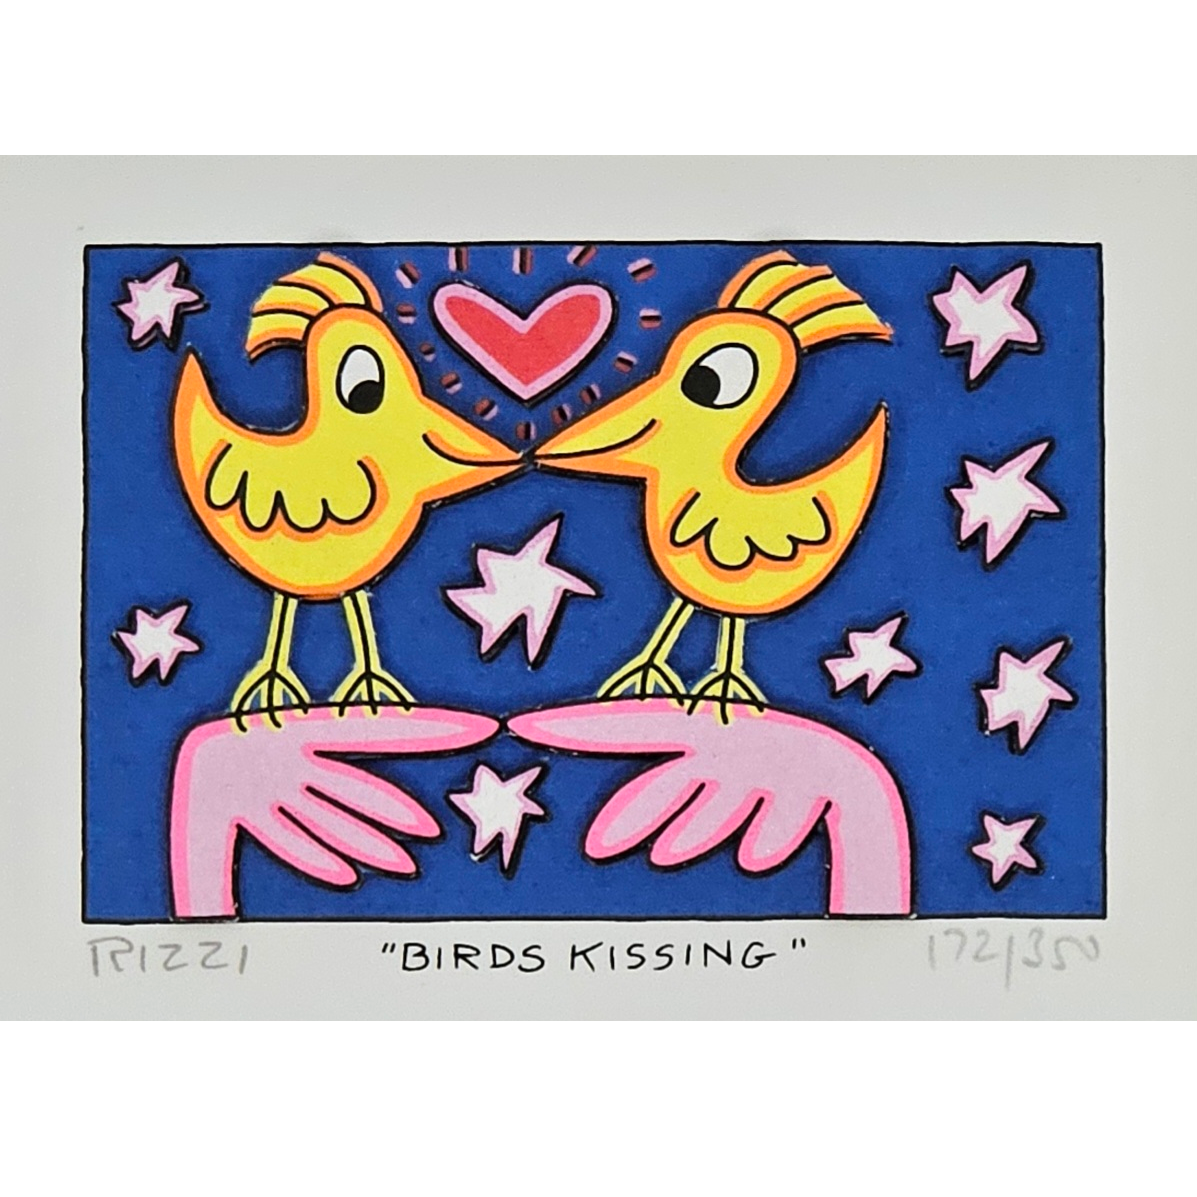 James Rizzi - Birds Kissing (2016)